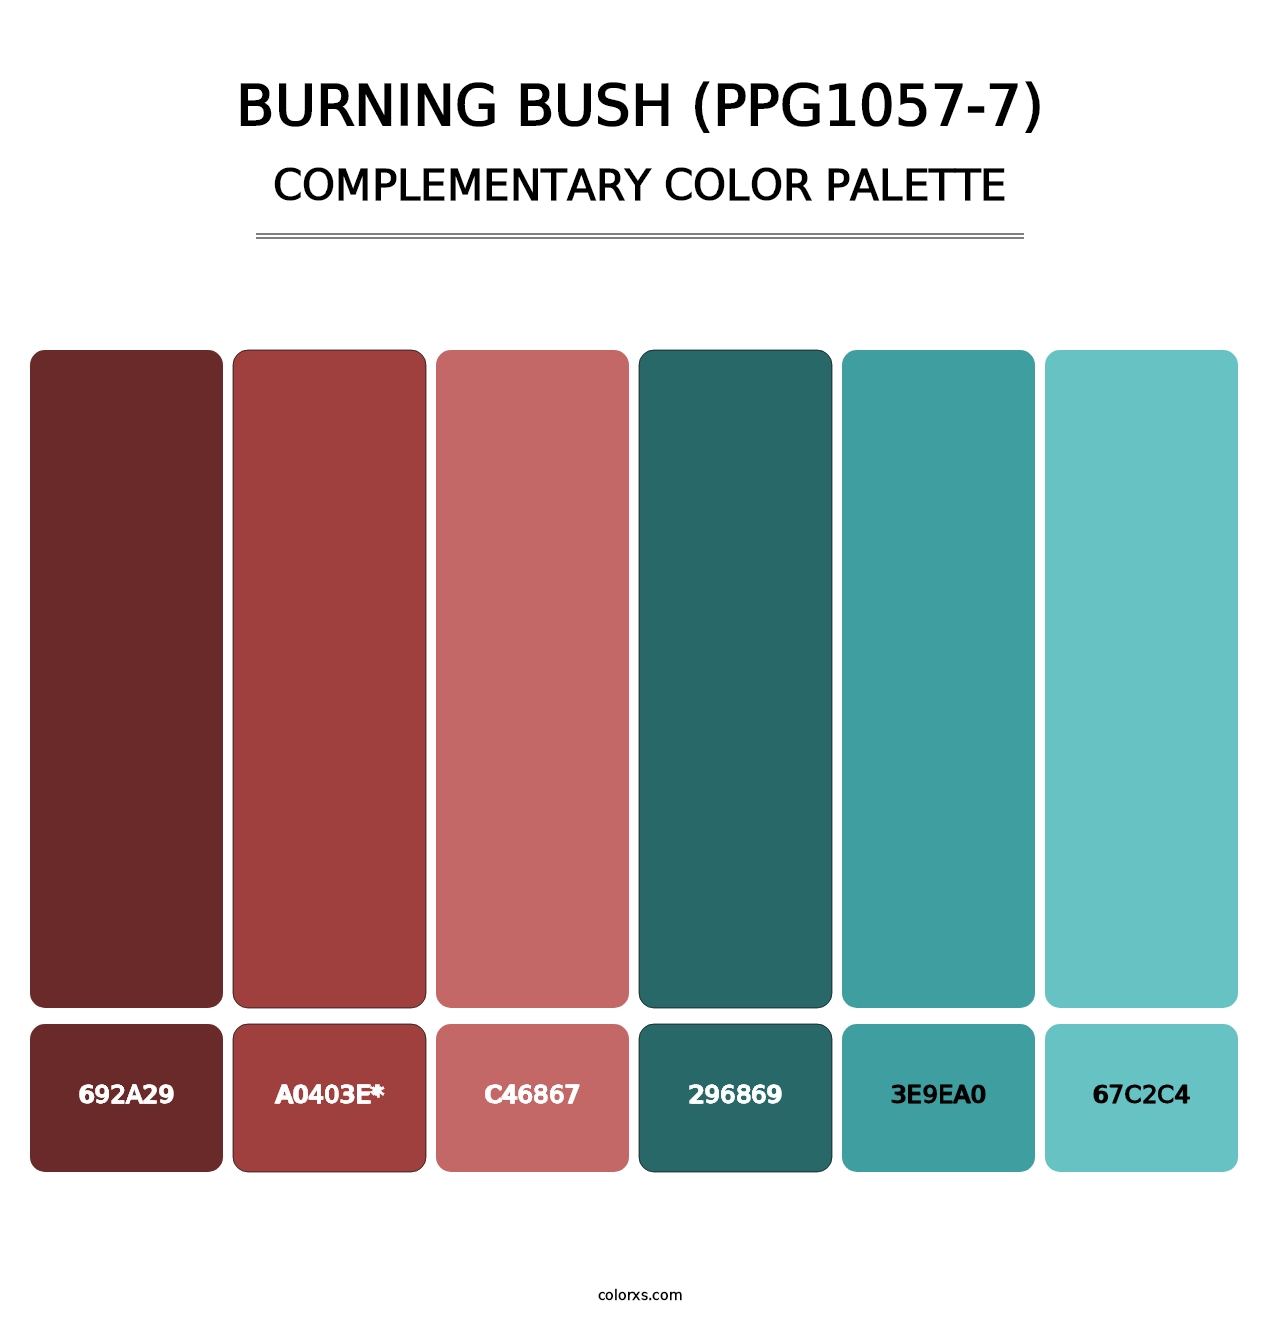 Burning Bush (PPG1057-7) - Complementary Color Palette